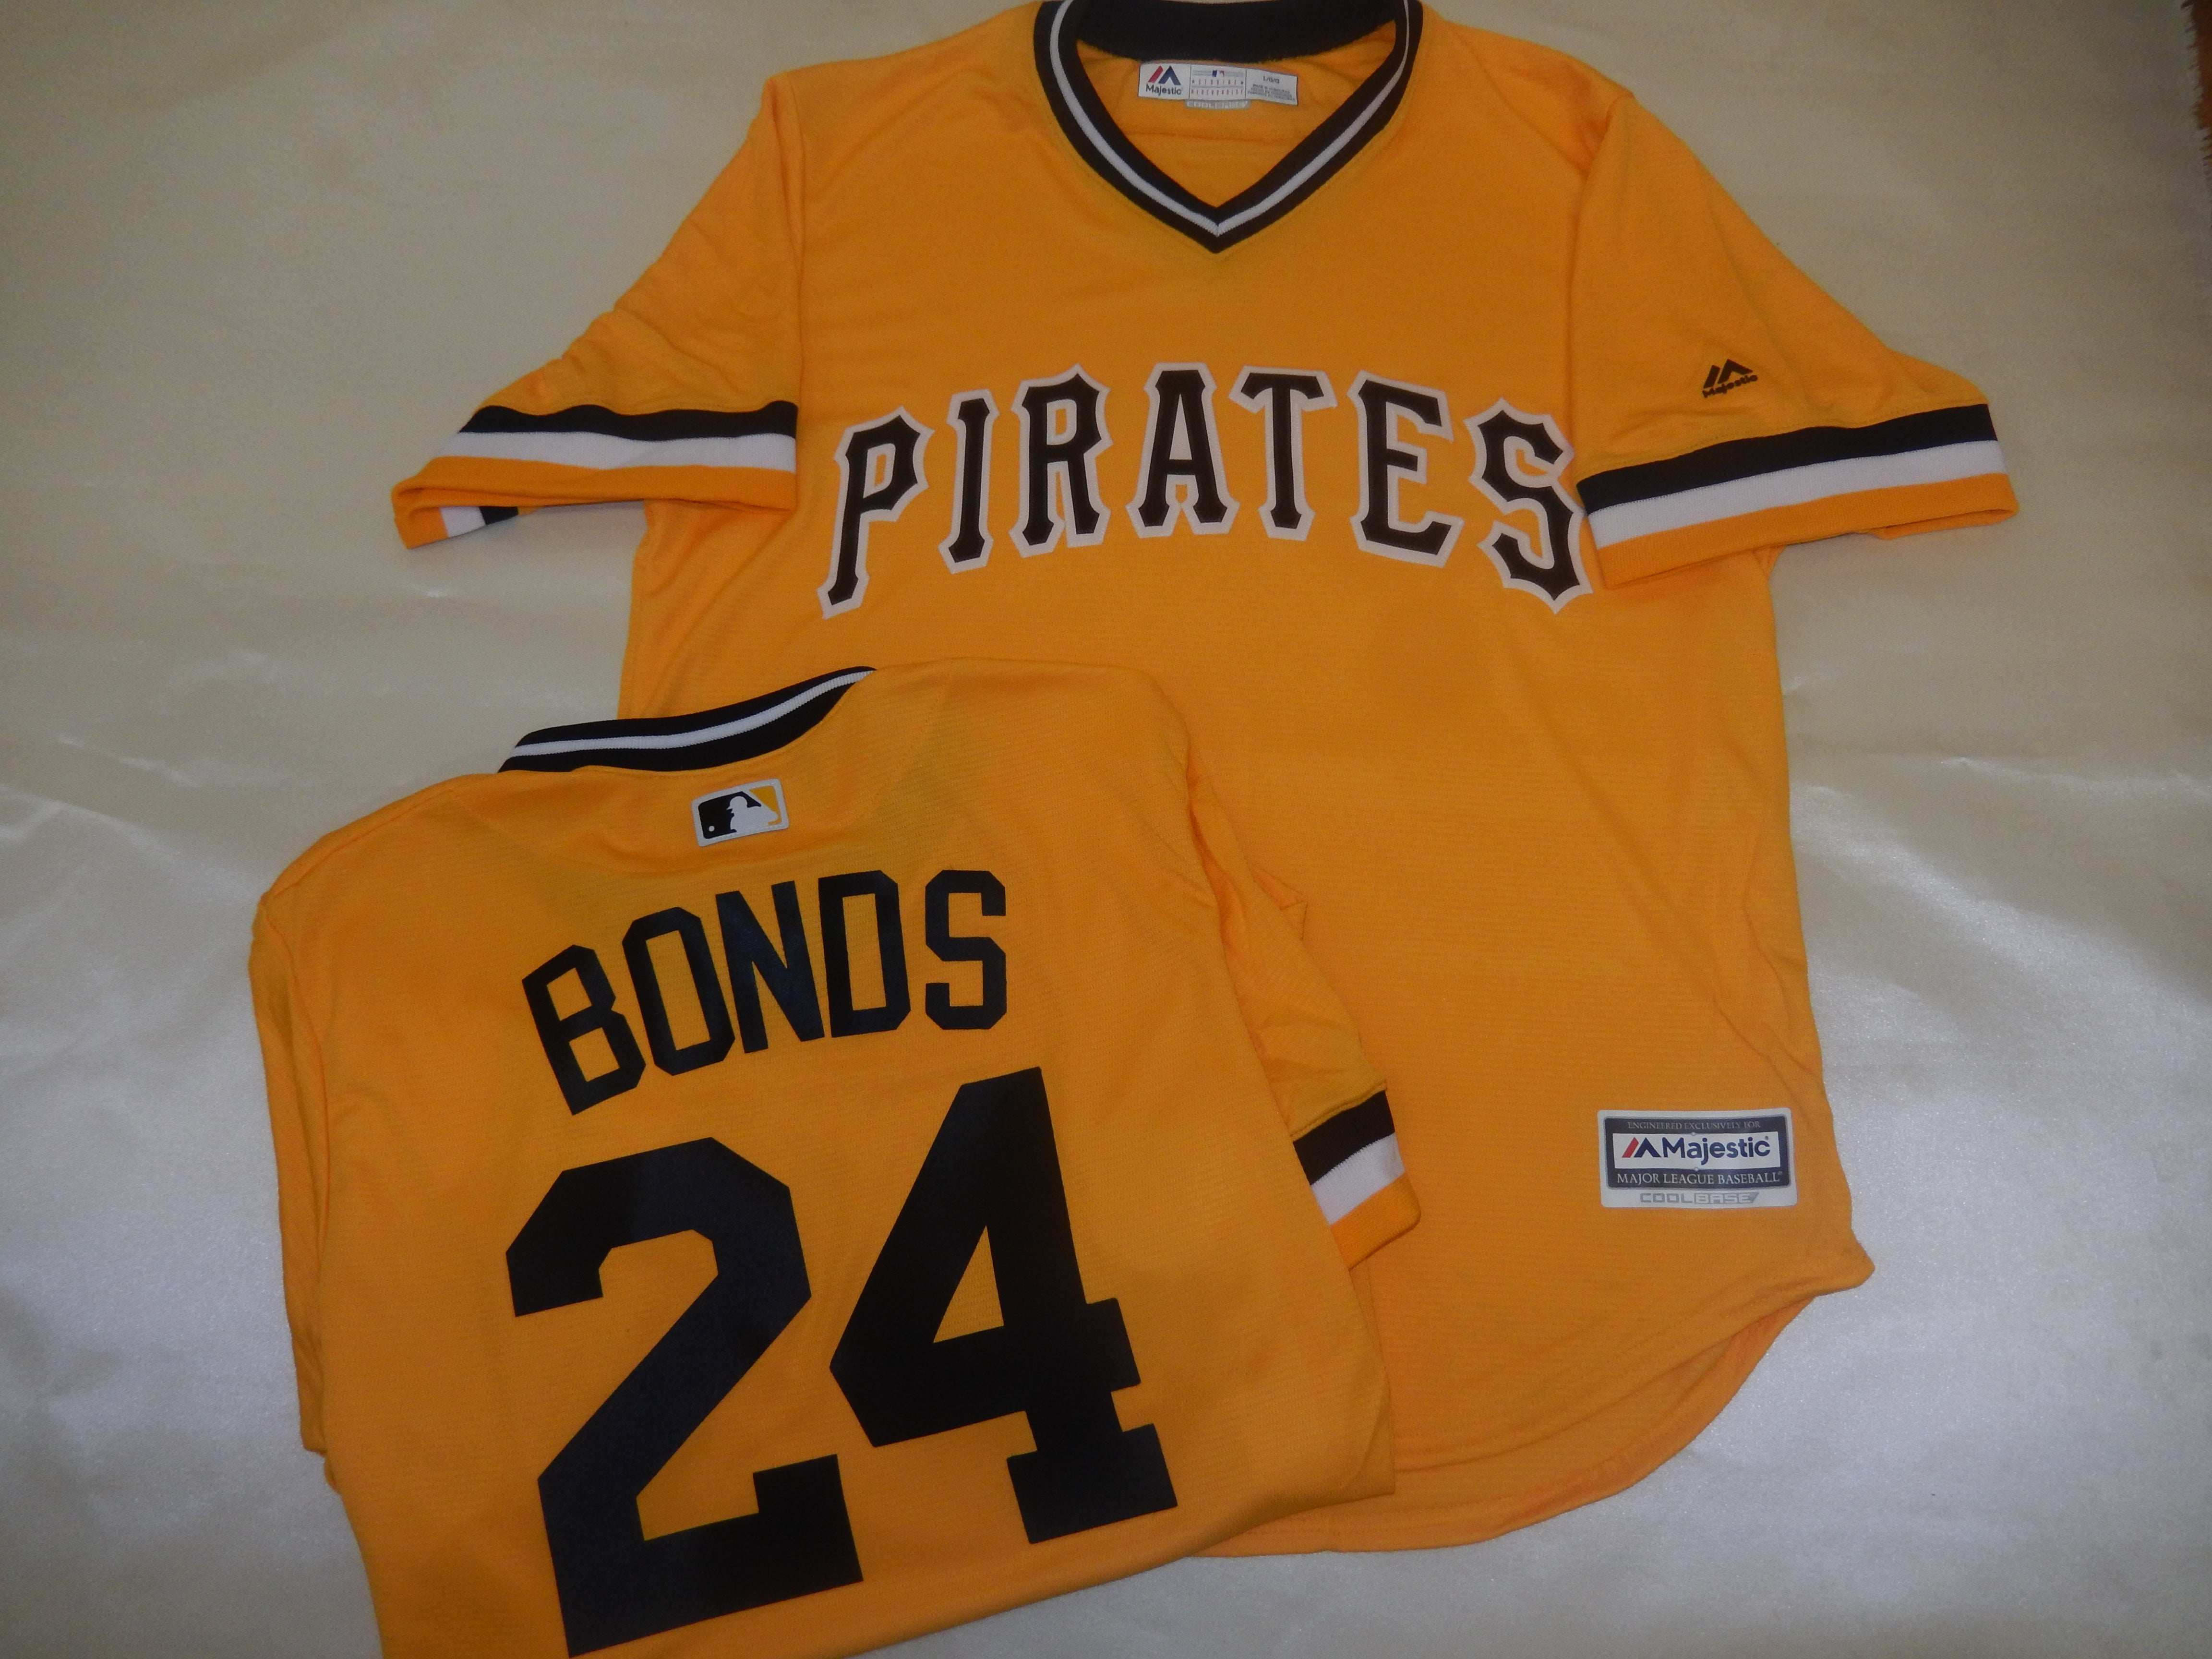 pirates bonds jersey